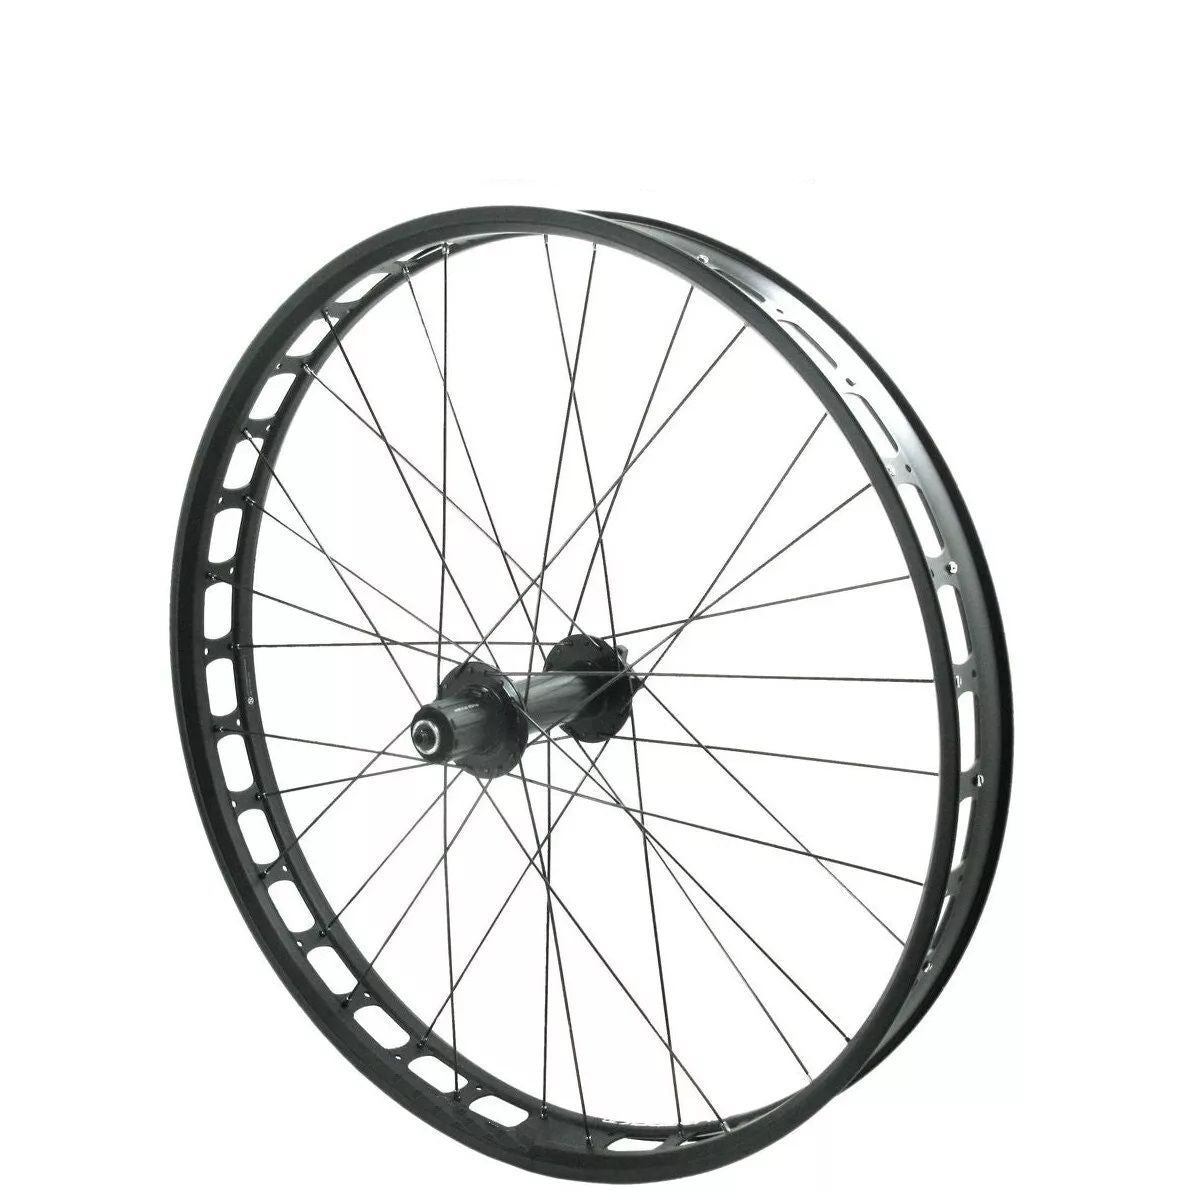 Alex Blizzerk 70 REAR 190mm QR Formula Tubeless Ready Fat Bike Wheel - The Bikesmiths